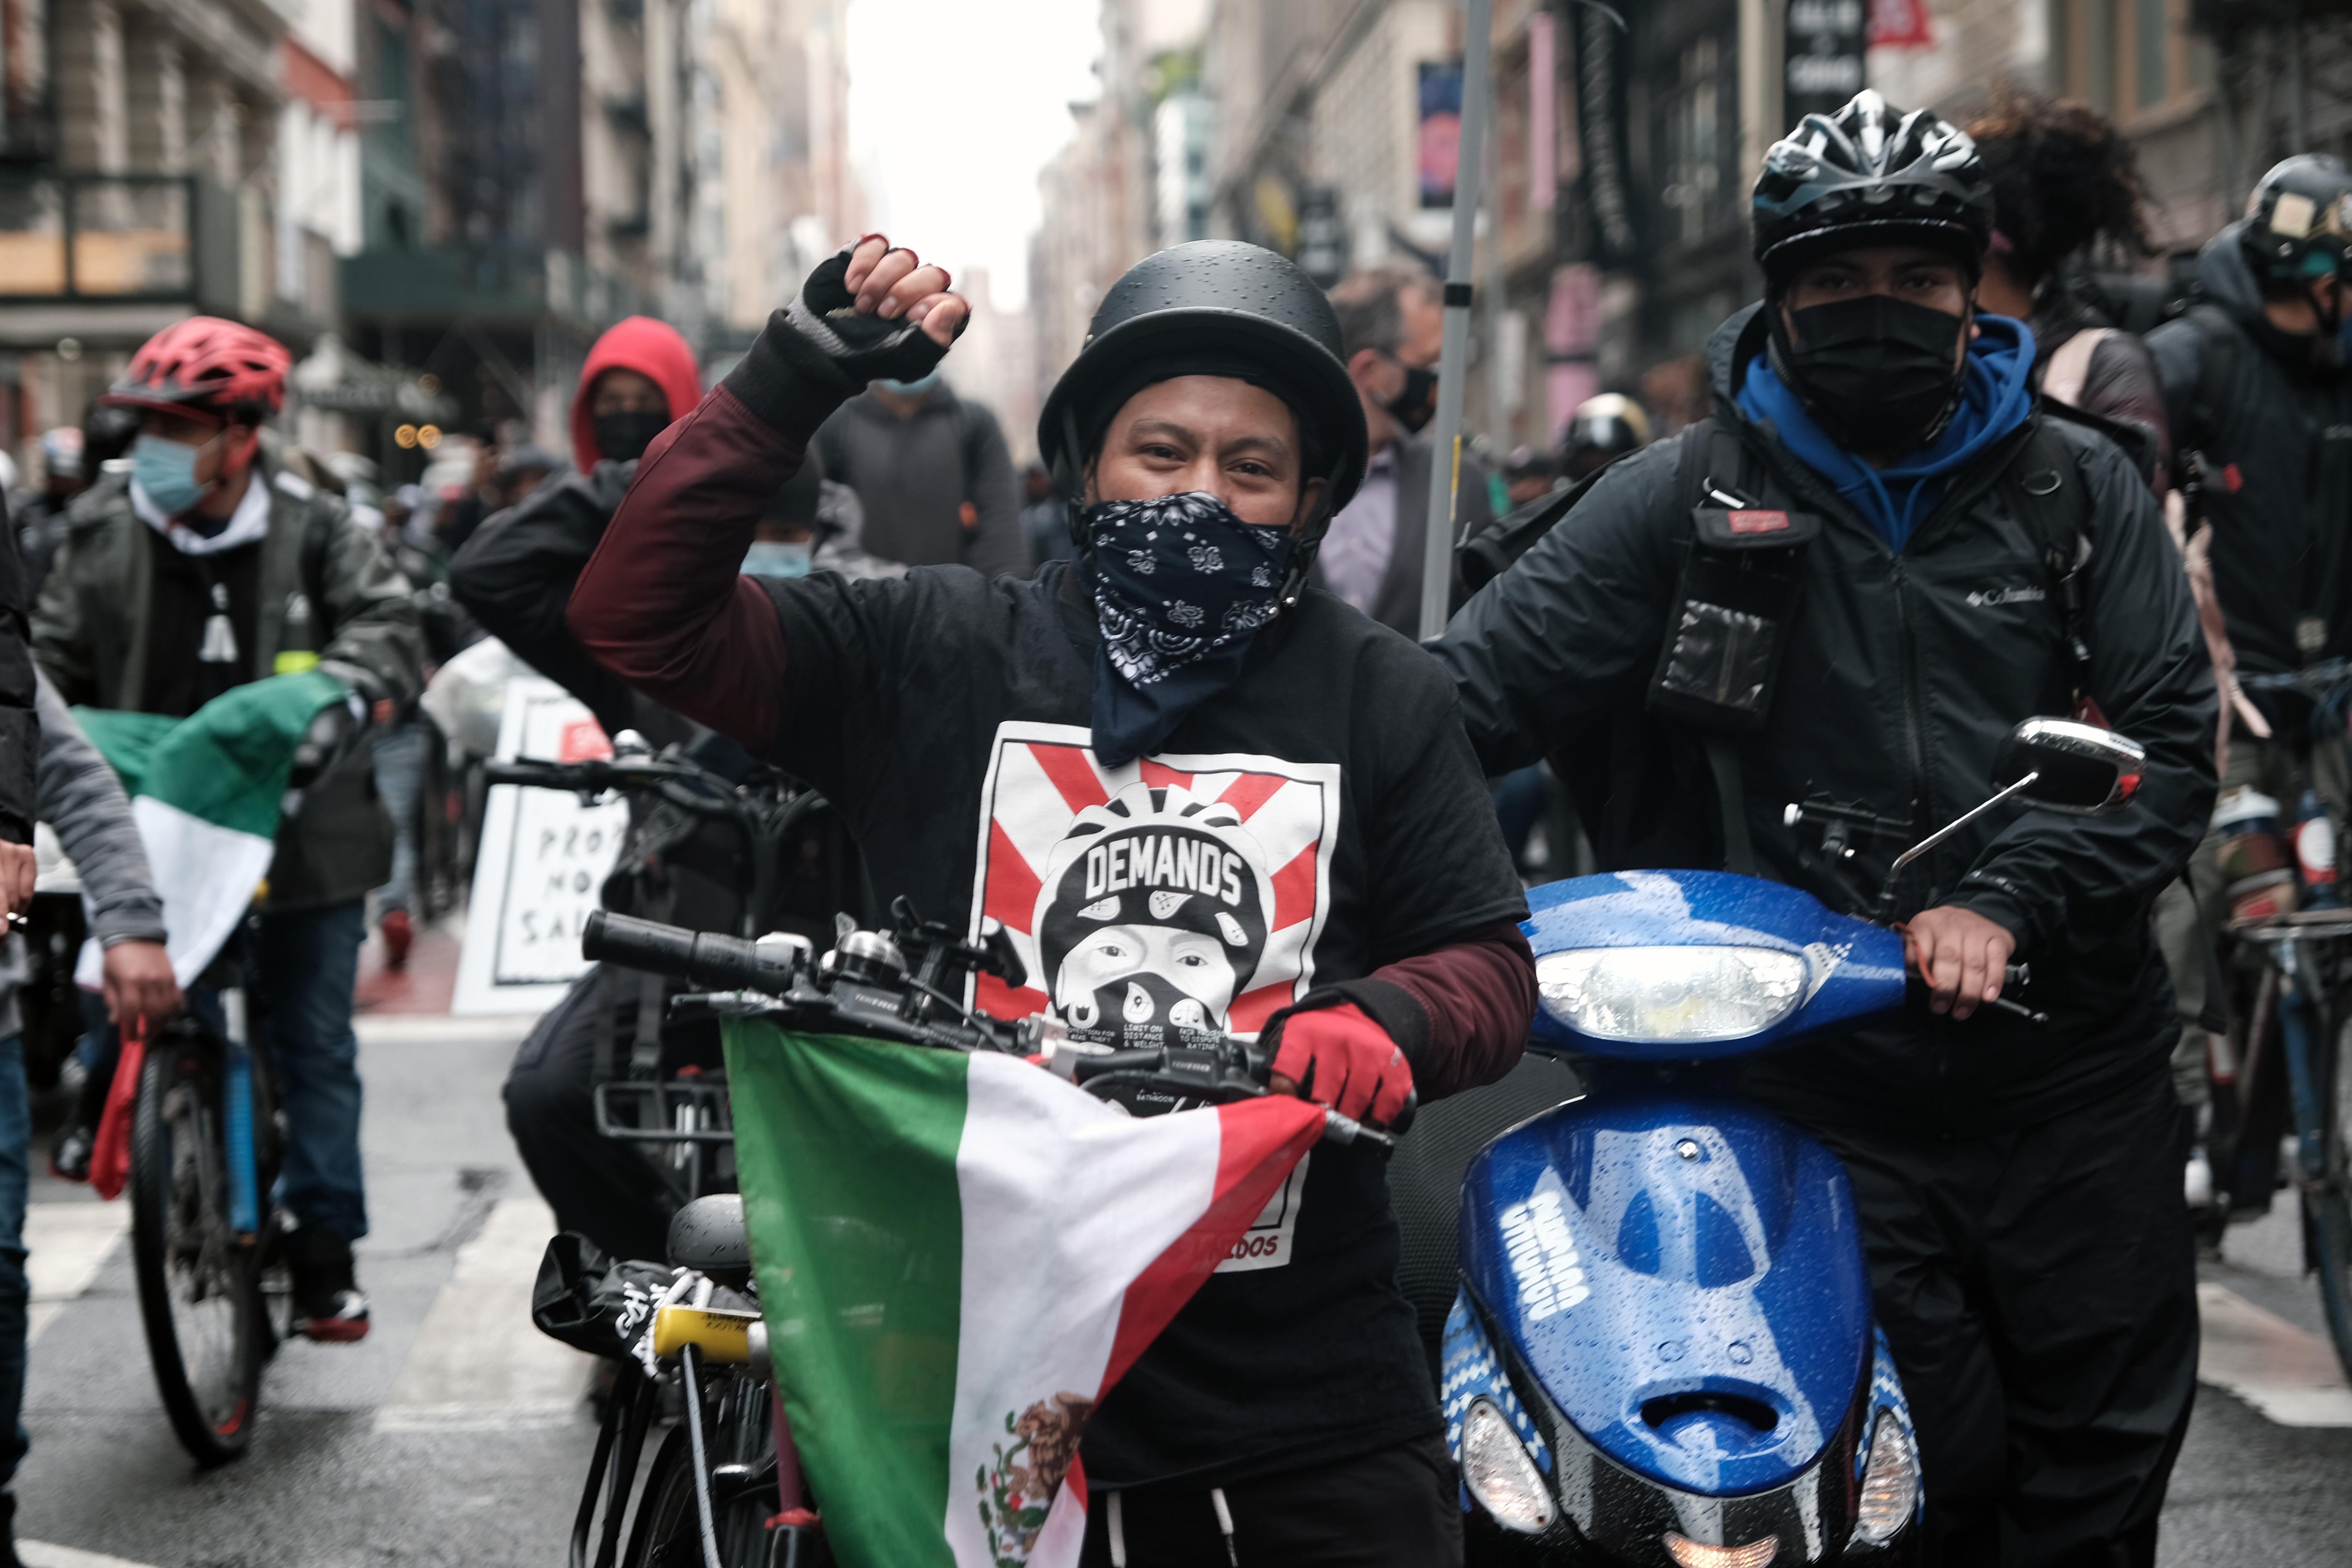 A man on a bike raises his fist in a march down a city street